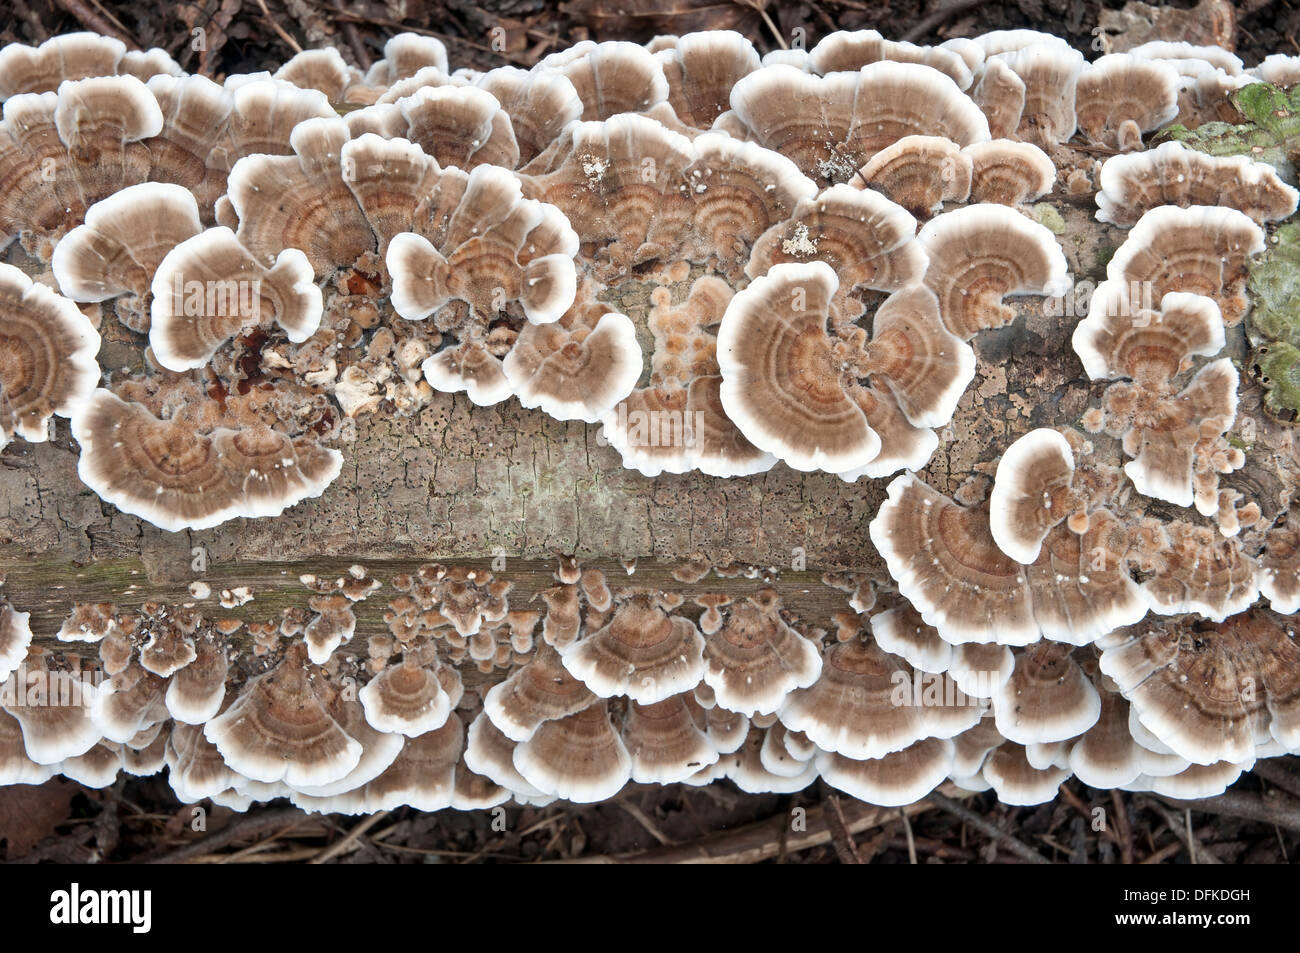 Tree mushroom, Bracket fungi,  Shelf fungi Stock Photo